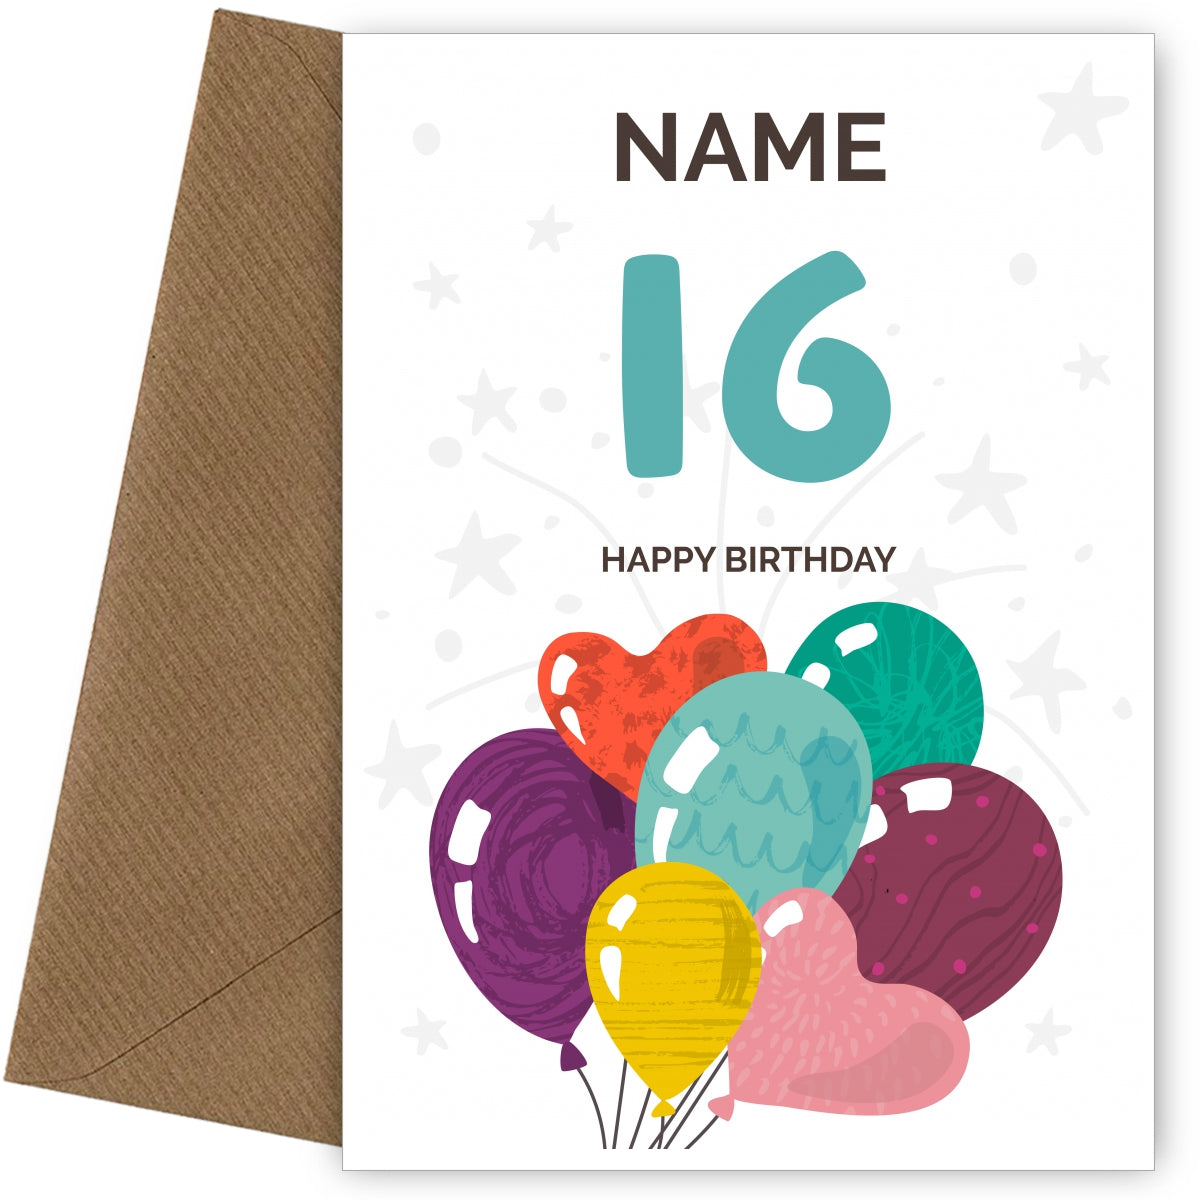 Happy 16th Birthday Card - Fun Balloons Design